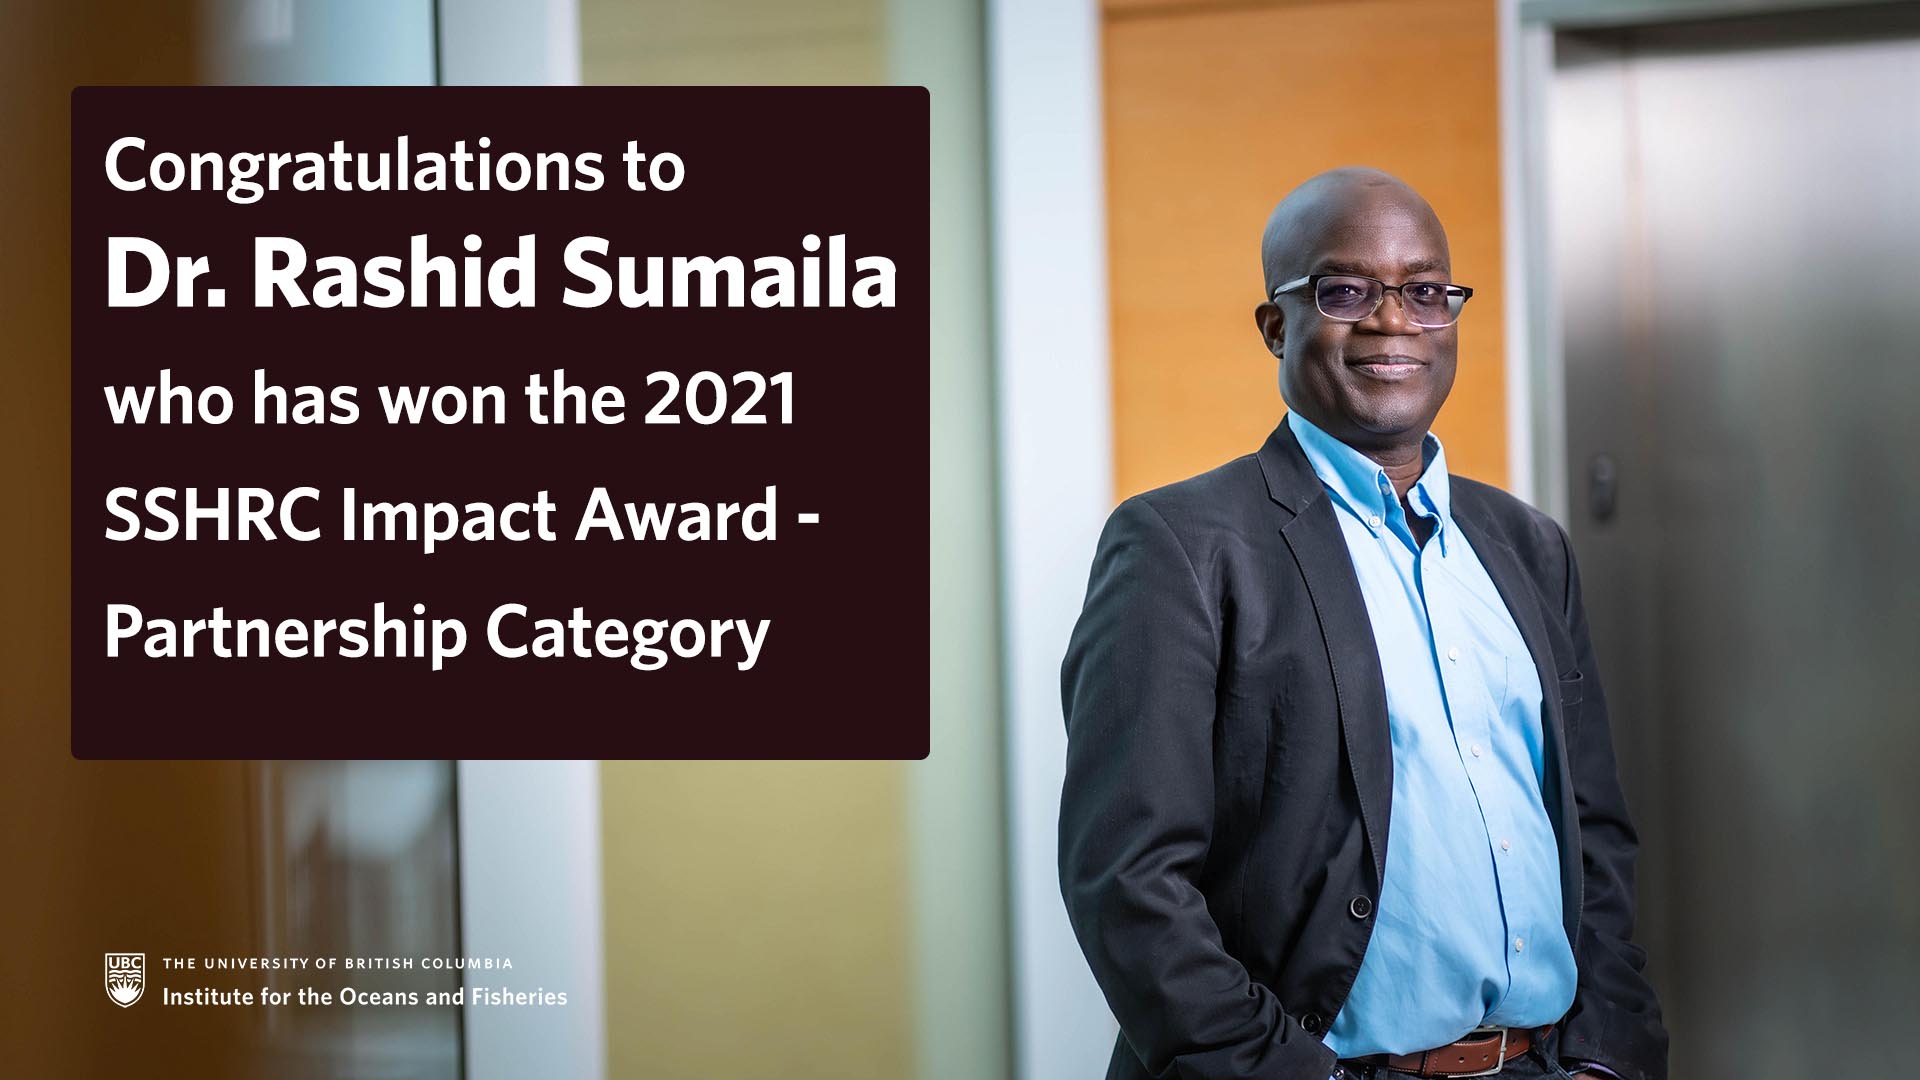 Dr. Rashid Sumaila wins SSHRC’s Impact Award, Partnership Category